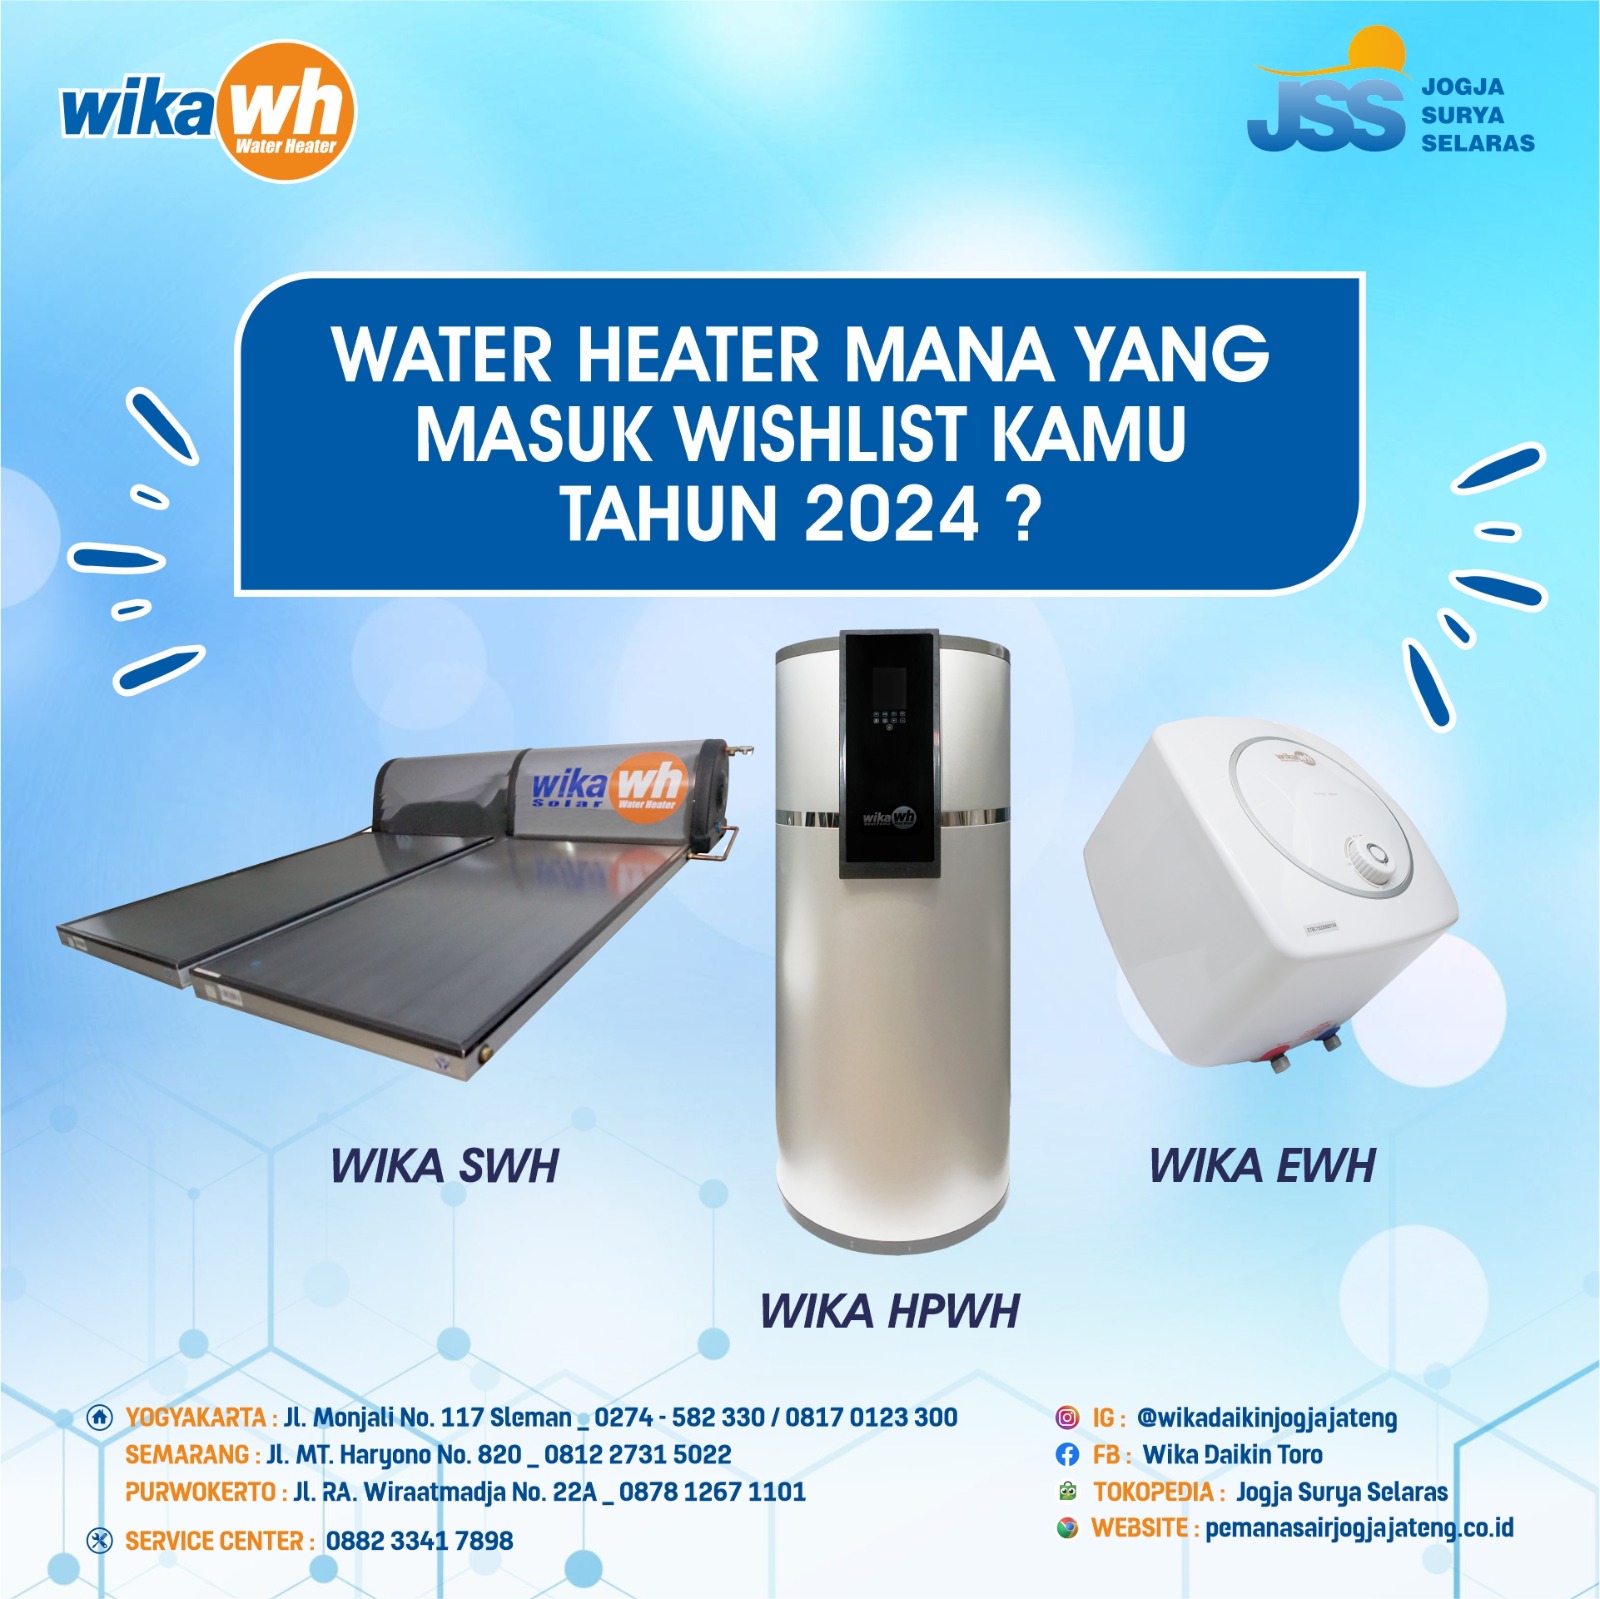 Water heater mana yang masuk wishlist kamu tahun 2024?